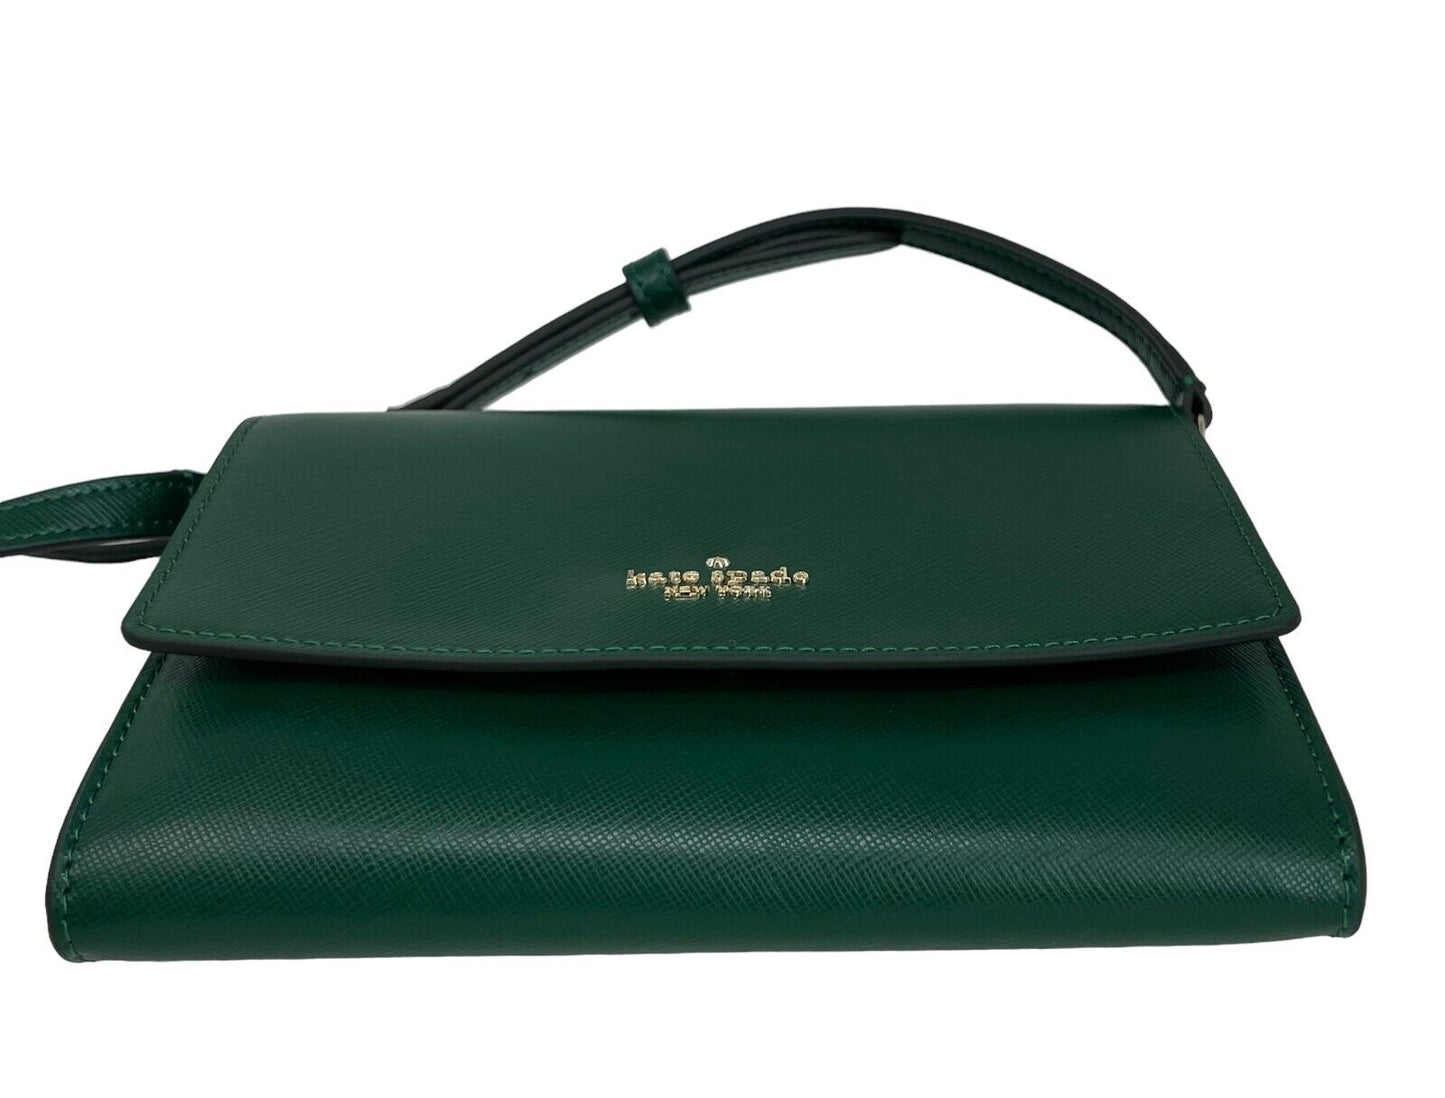 Kate Spade Perry Saffiano Leather Deep Jade Crossbody Bag K8709 $239